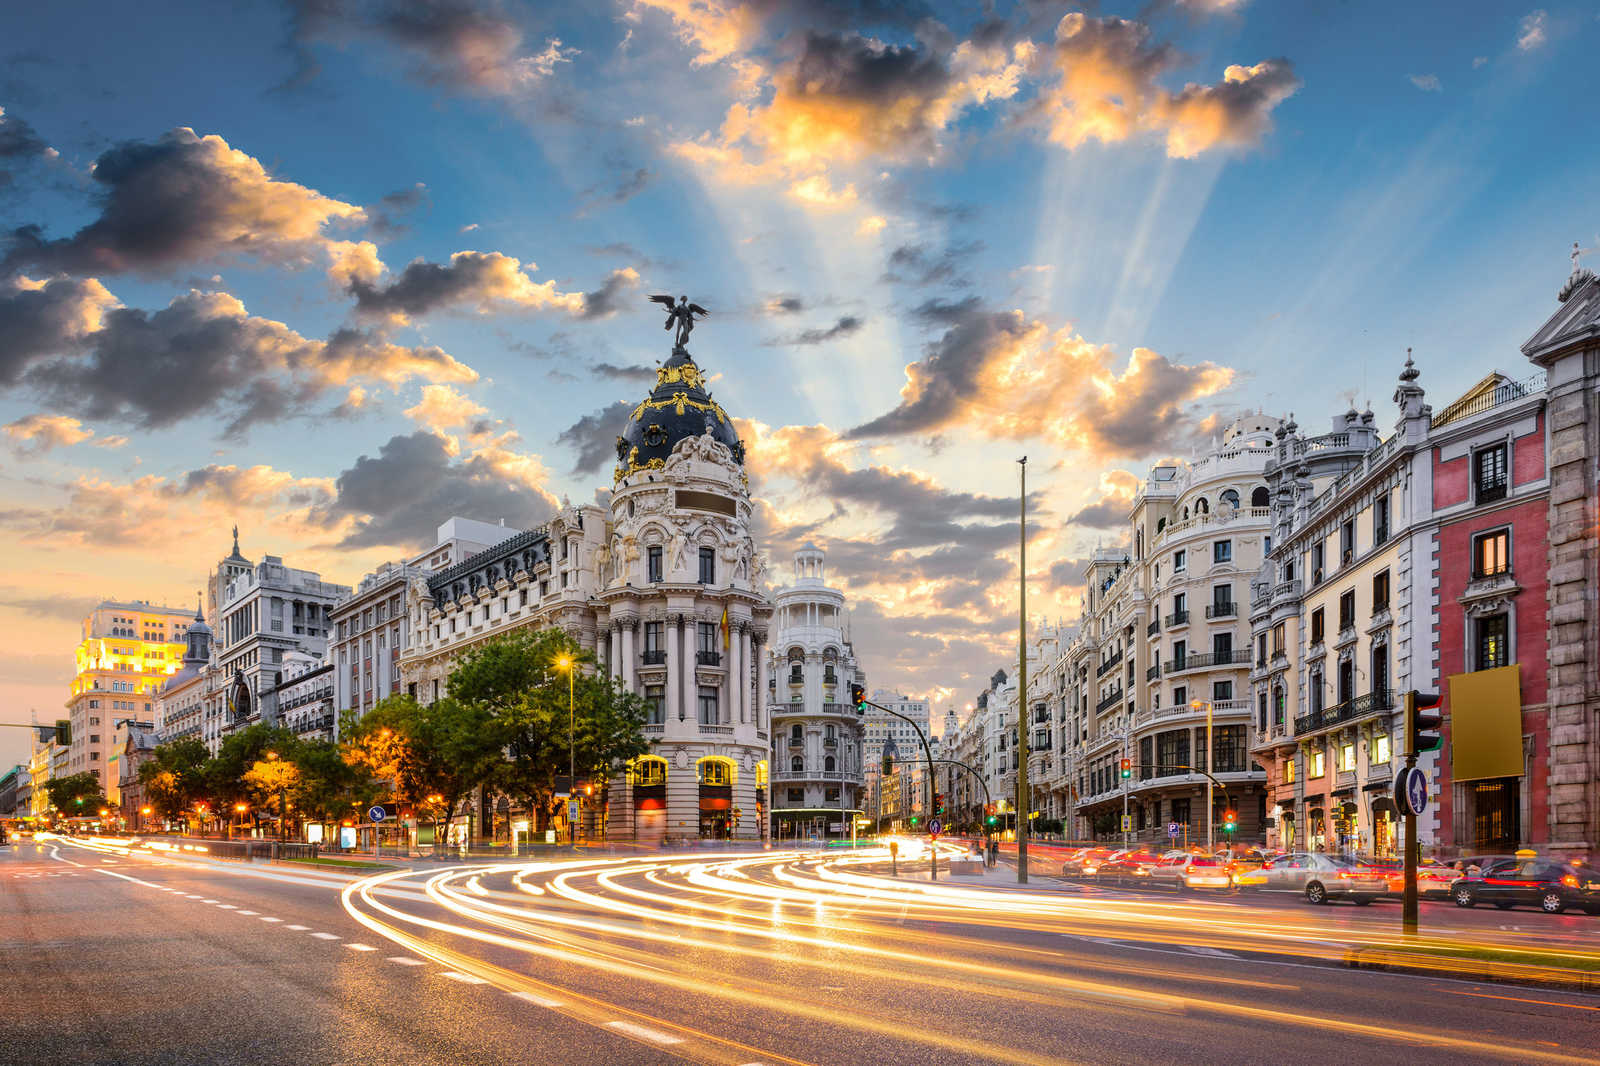             Lienzo con las calles de Madrid por la mañana - 0,90 m x 0,60 m
        